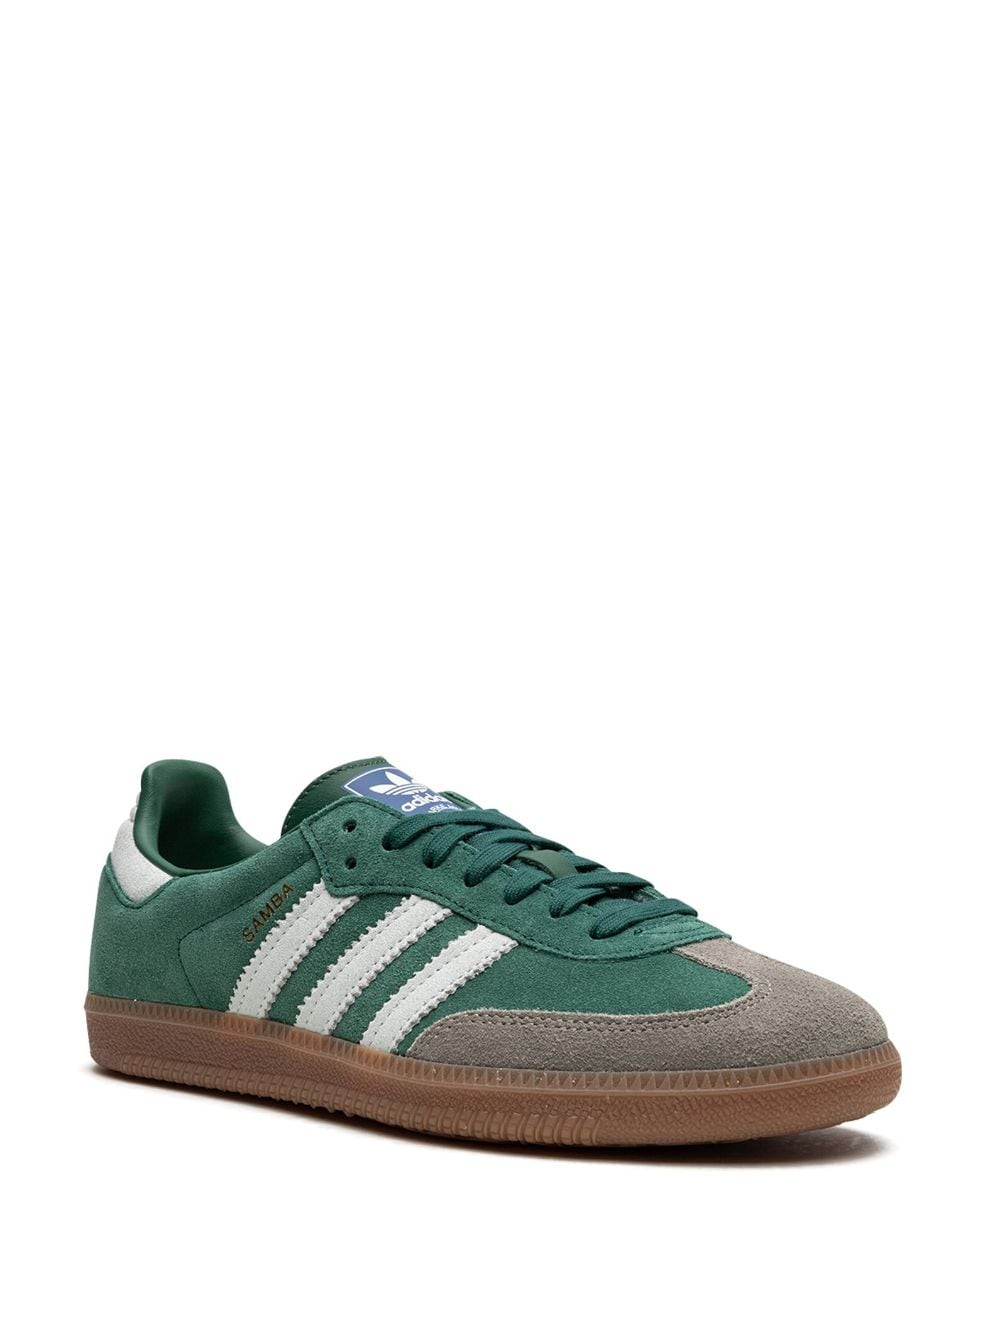 Image 2 of adidas Samba OG "Court Green" sneakers